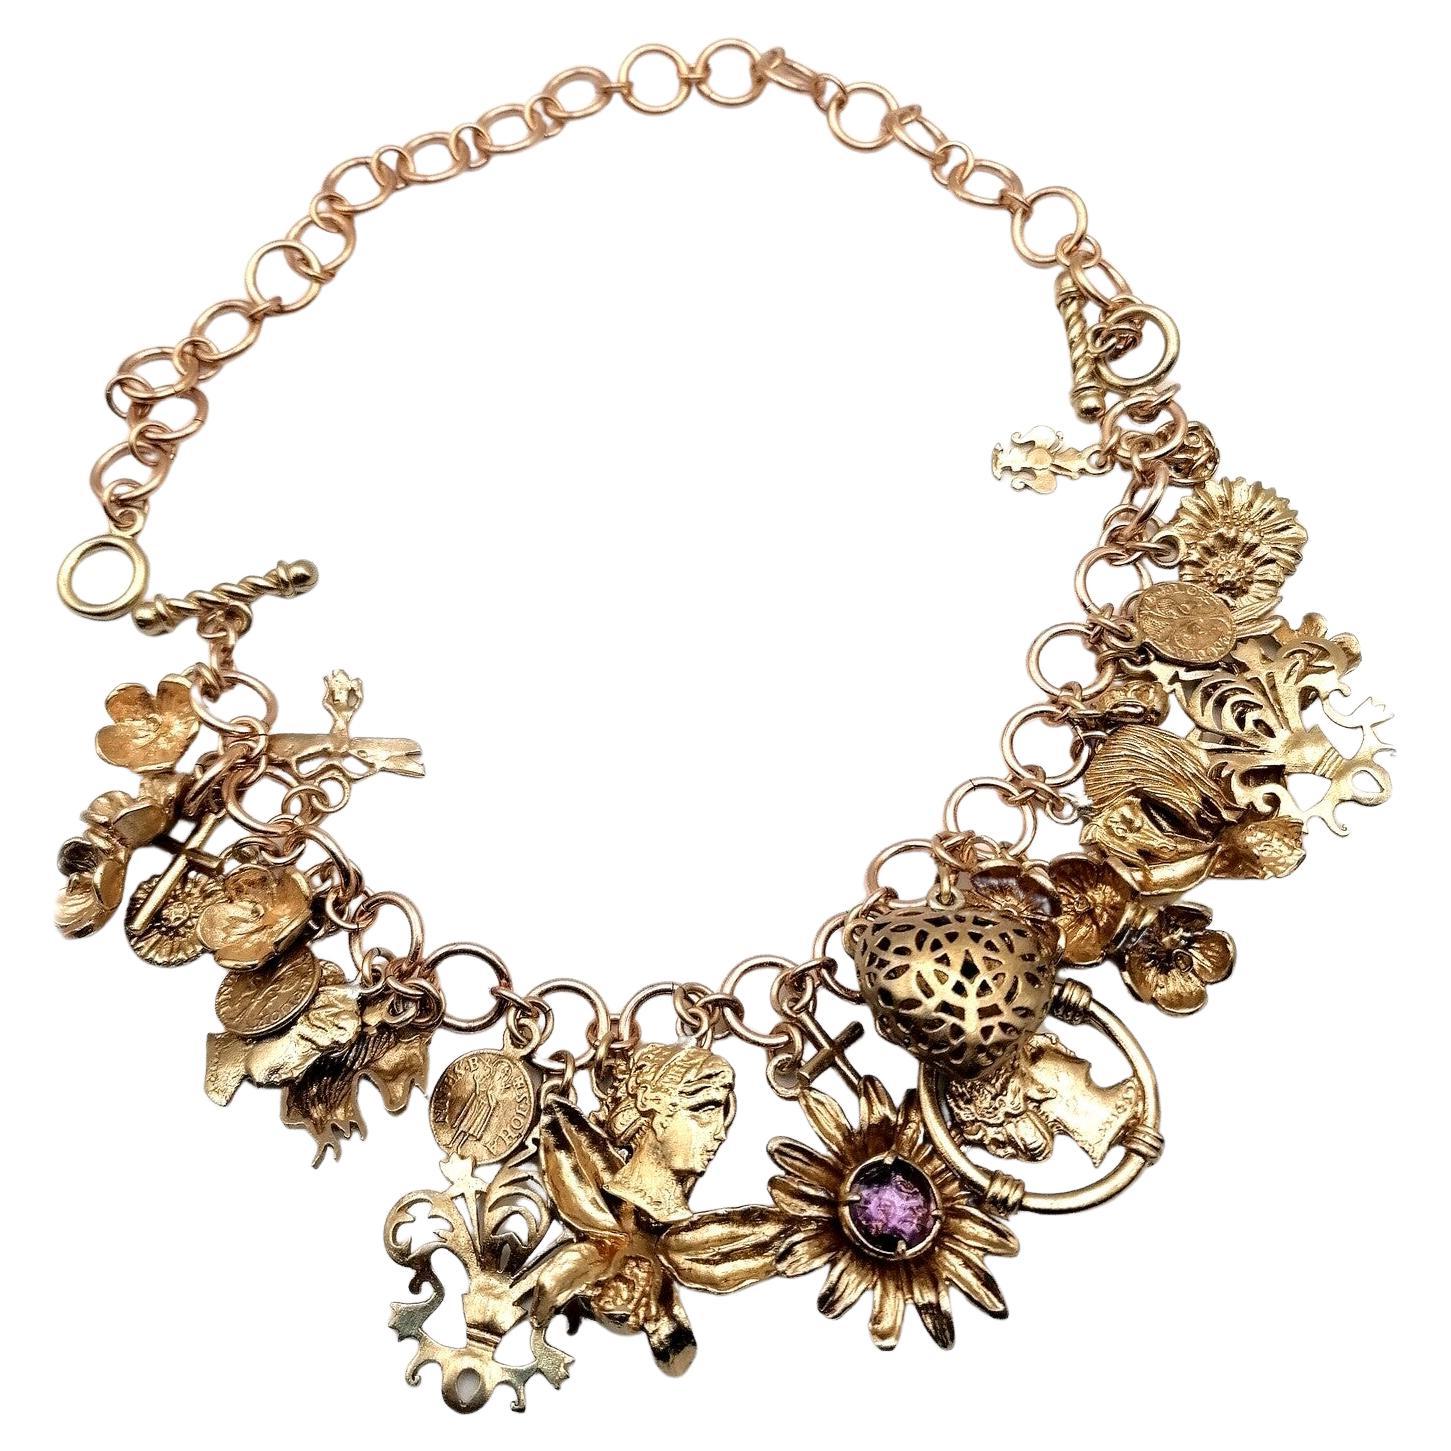 Pure Bronze "Charm" Necklace / Bracelet by Patrizia Daliana For Sale